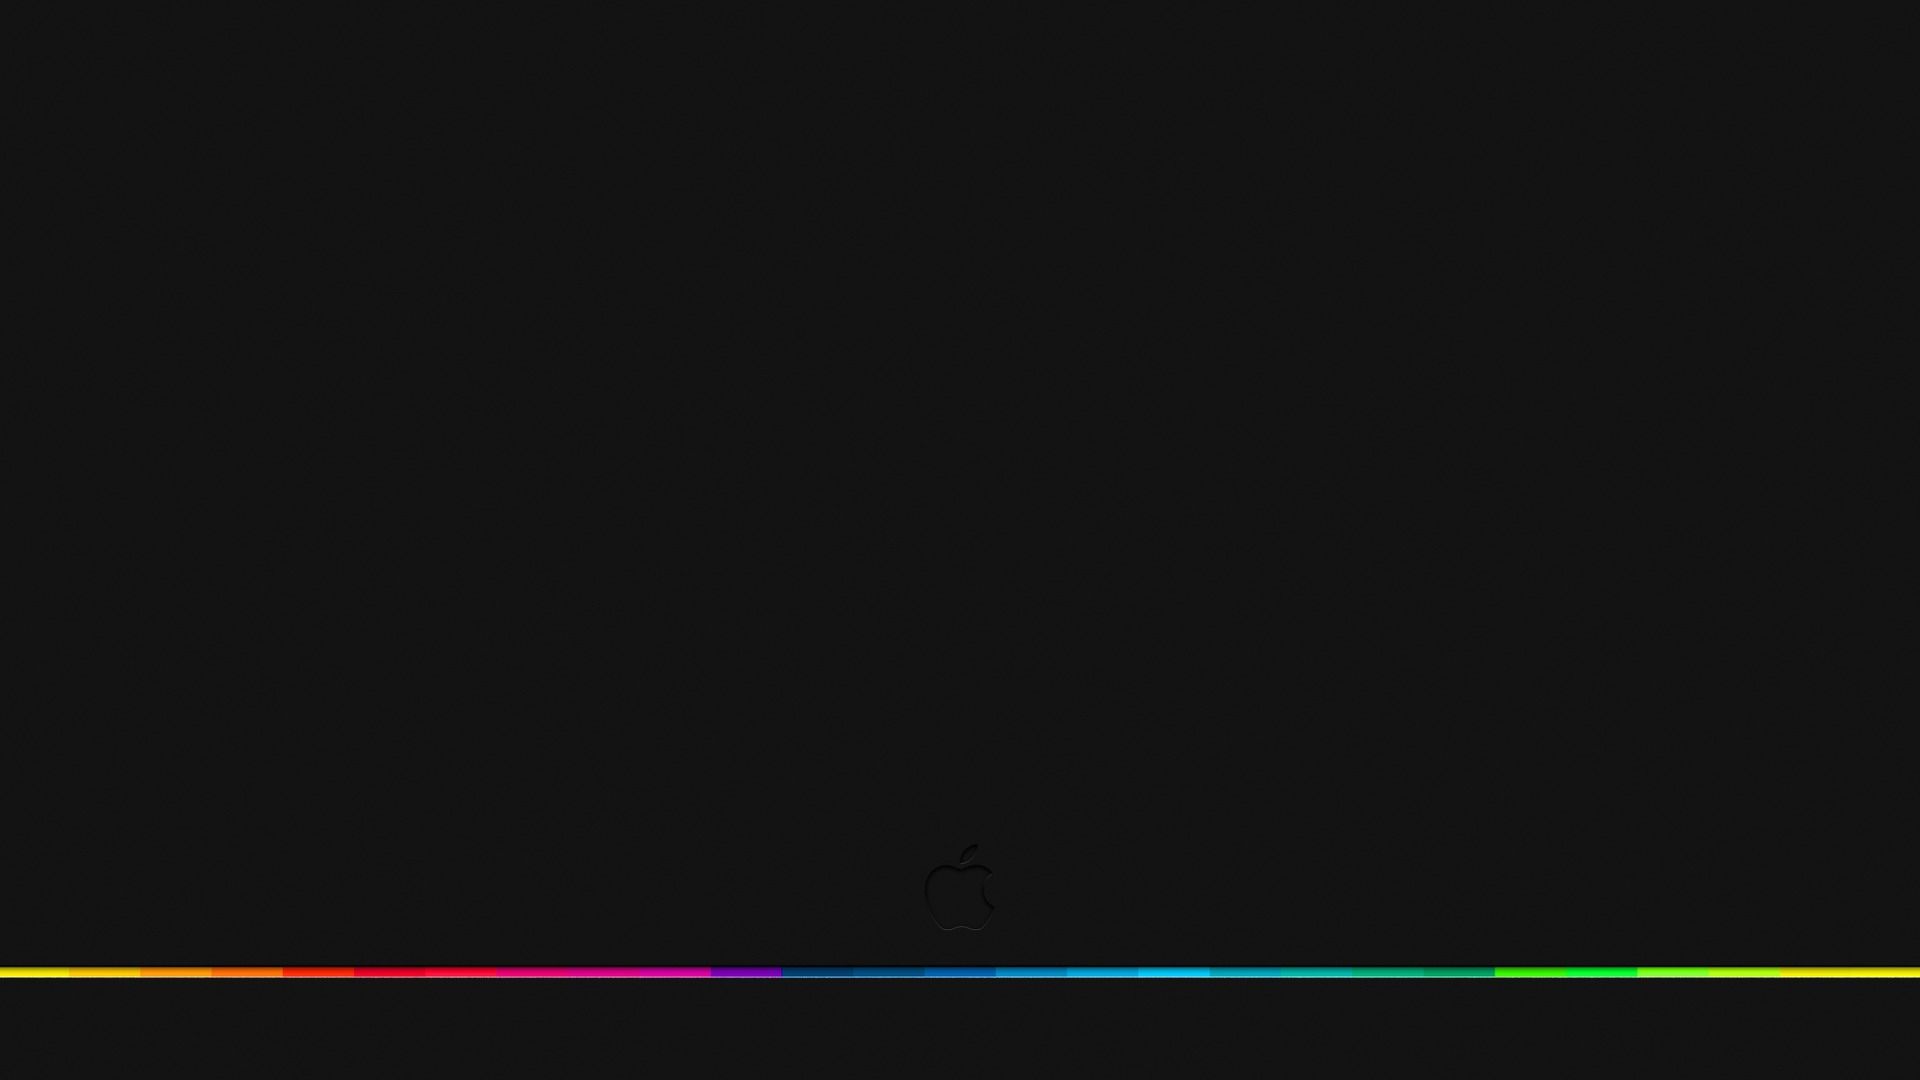 Dark Desktop Background. Beautiful Widescreen Desktop Wallpaper, Desktop Wallpaper and Naruto Desktop Background